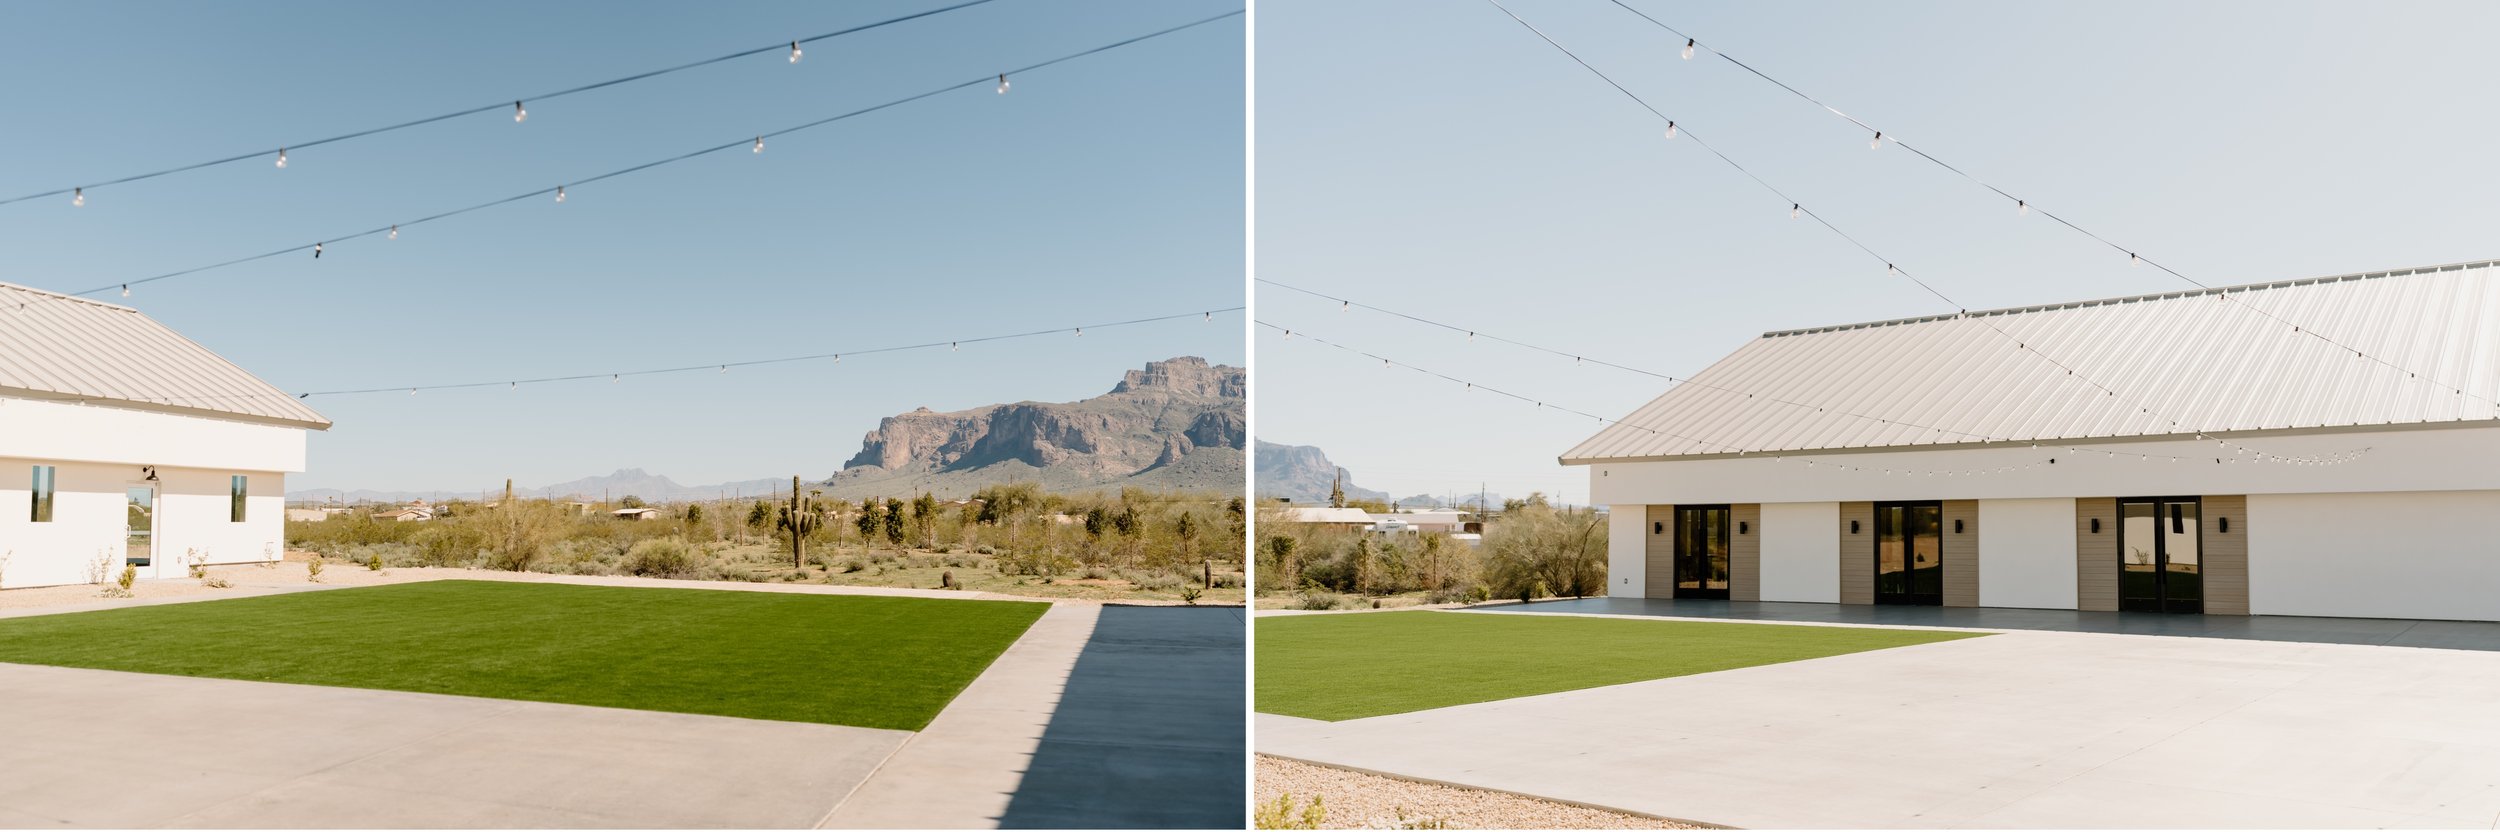 14_Desert View Weddings and Events in Apache Junction, Arizona.jpg